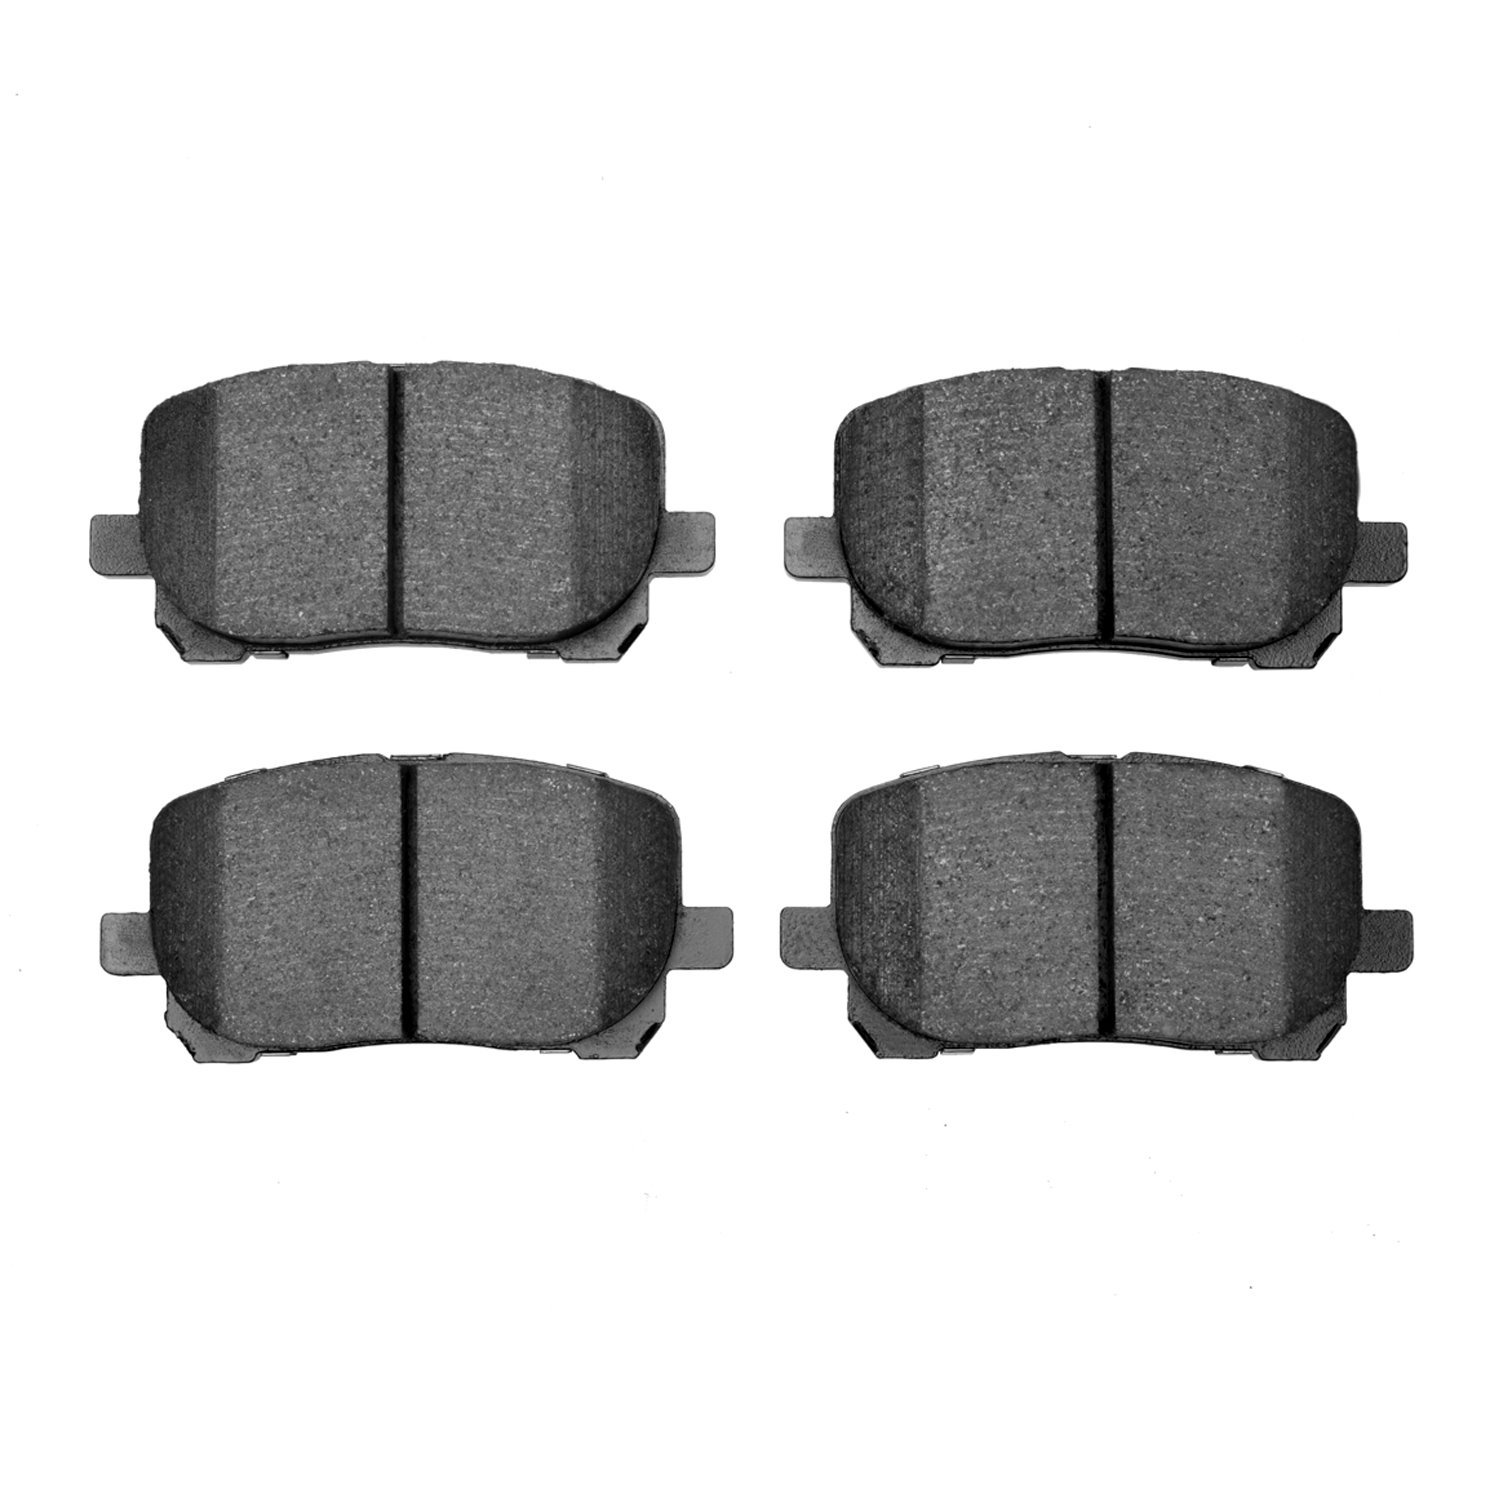 Semi-Metallic Brake Pads, 2003-2008 Fits Multiple Makes/Models, Position: Front